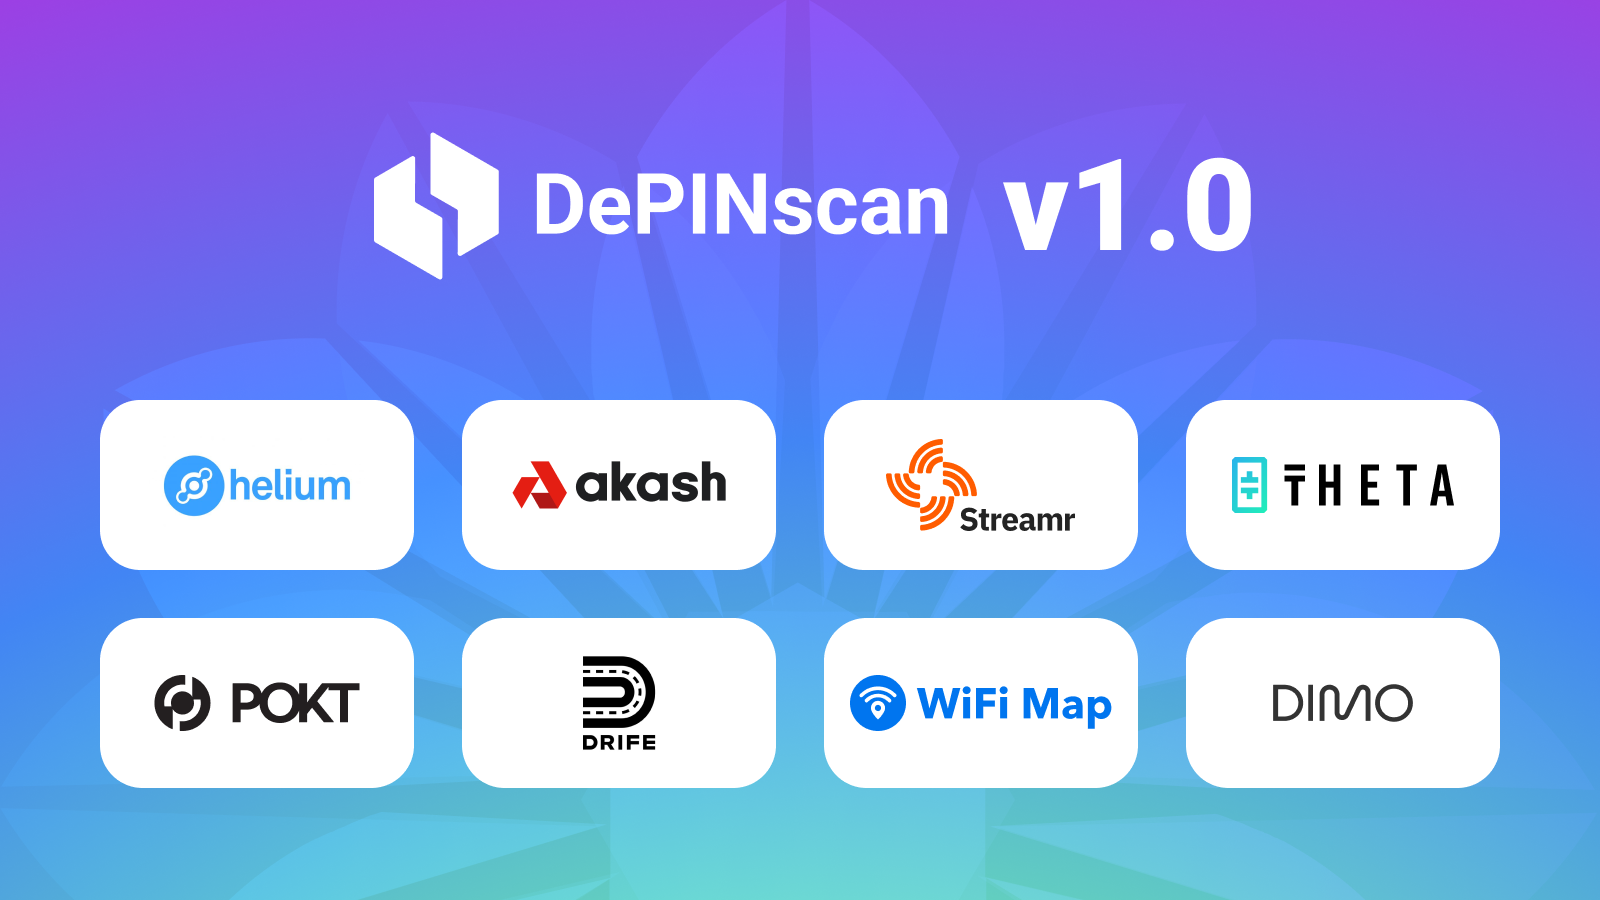 DePINscan v1.0 Launch: Navigate DePIN with Unprecedented Ease